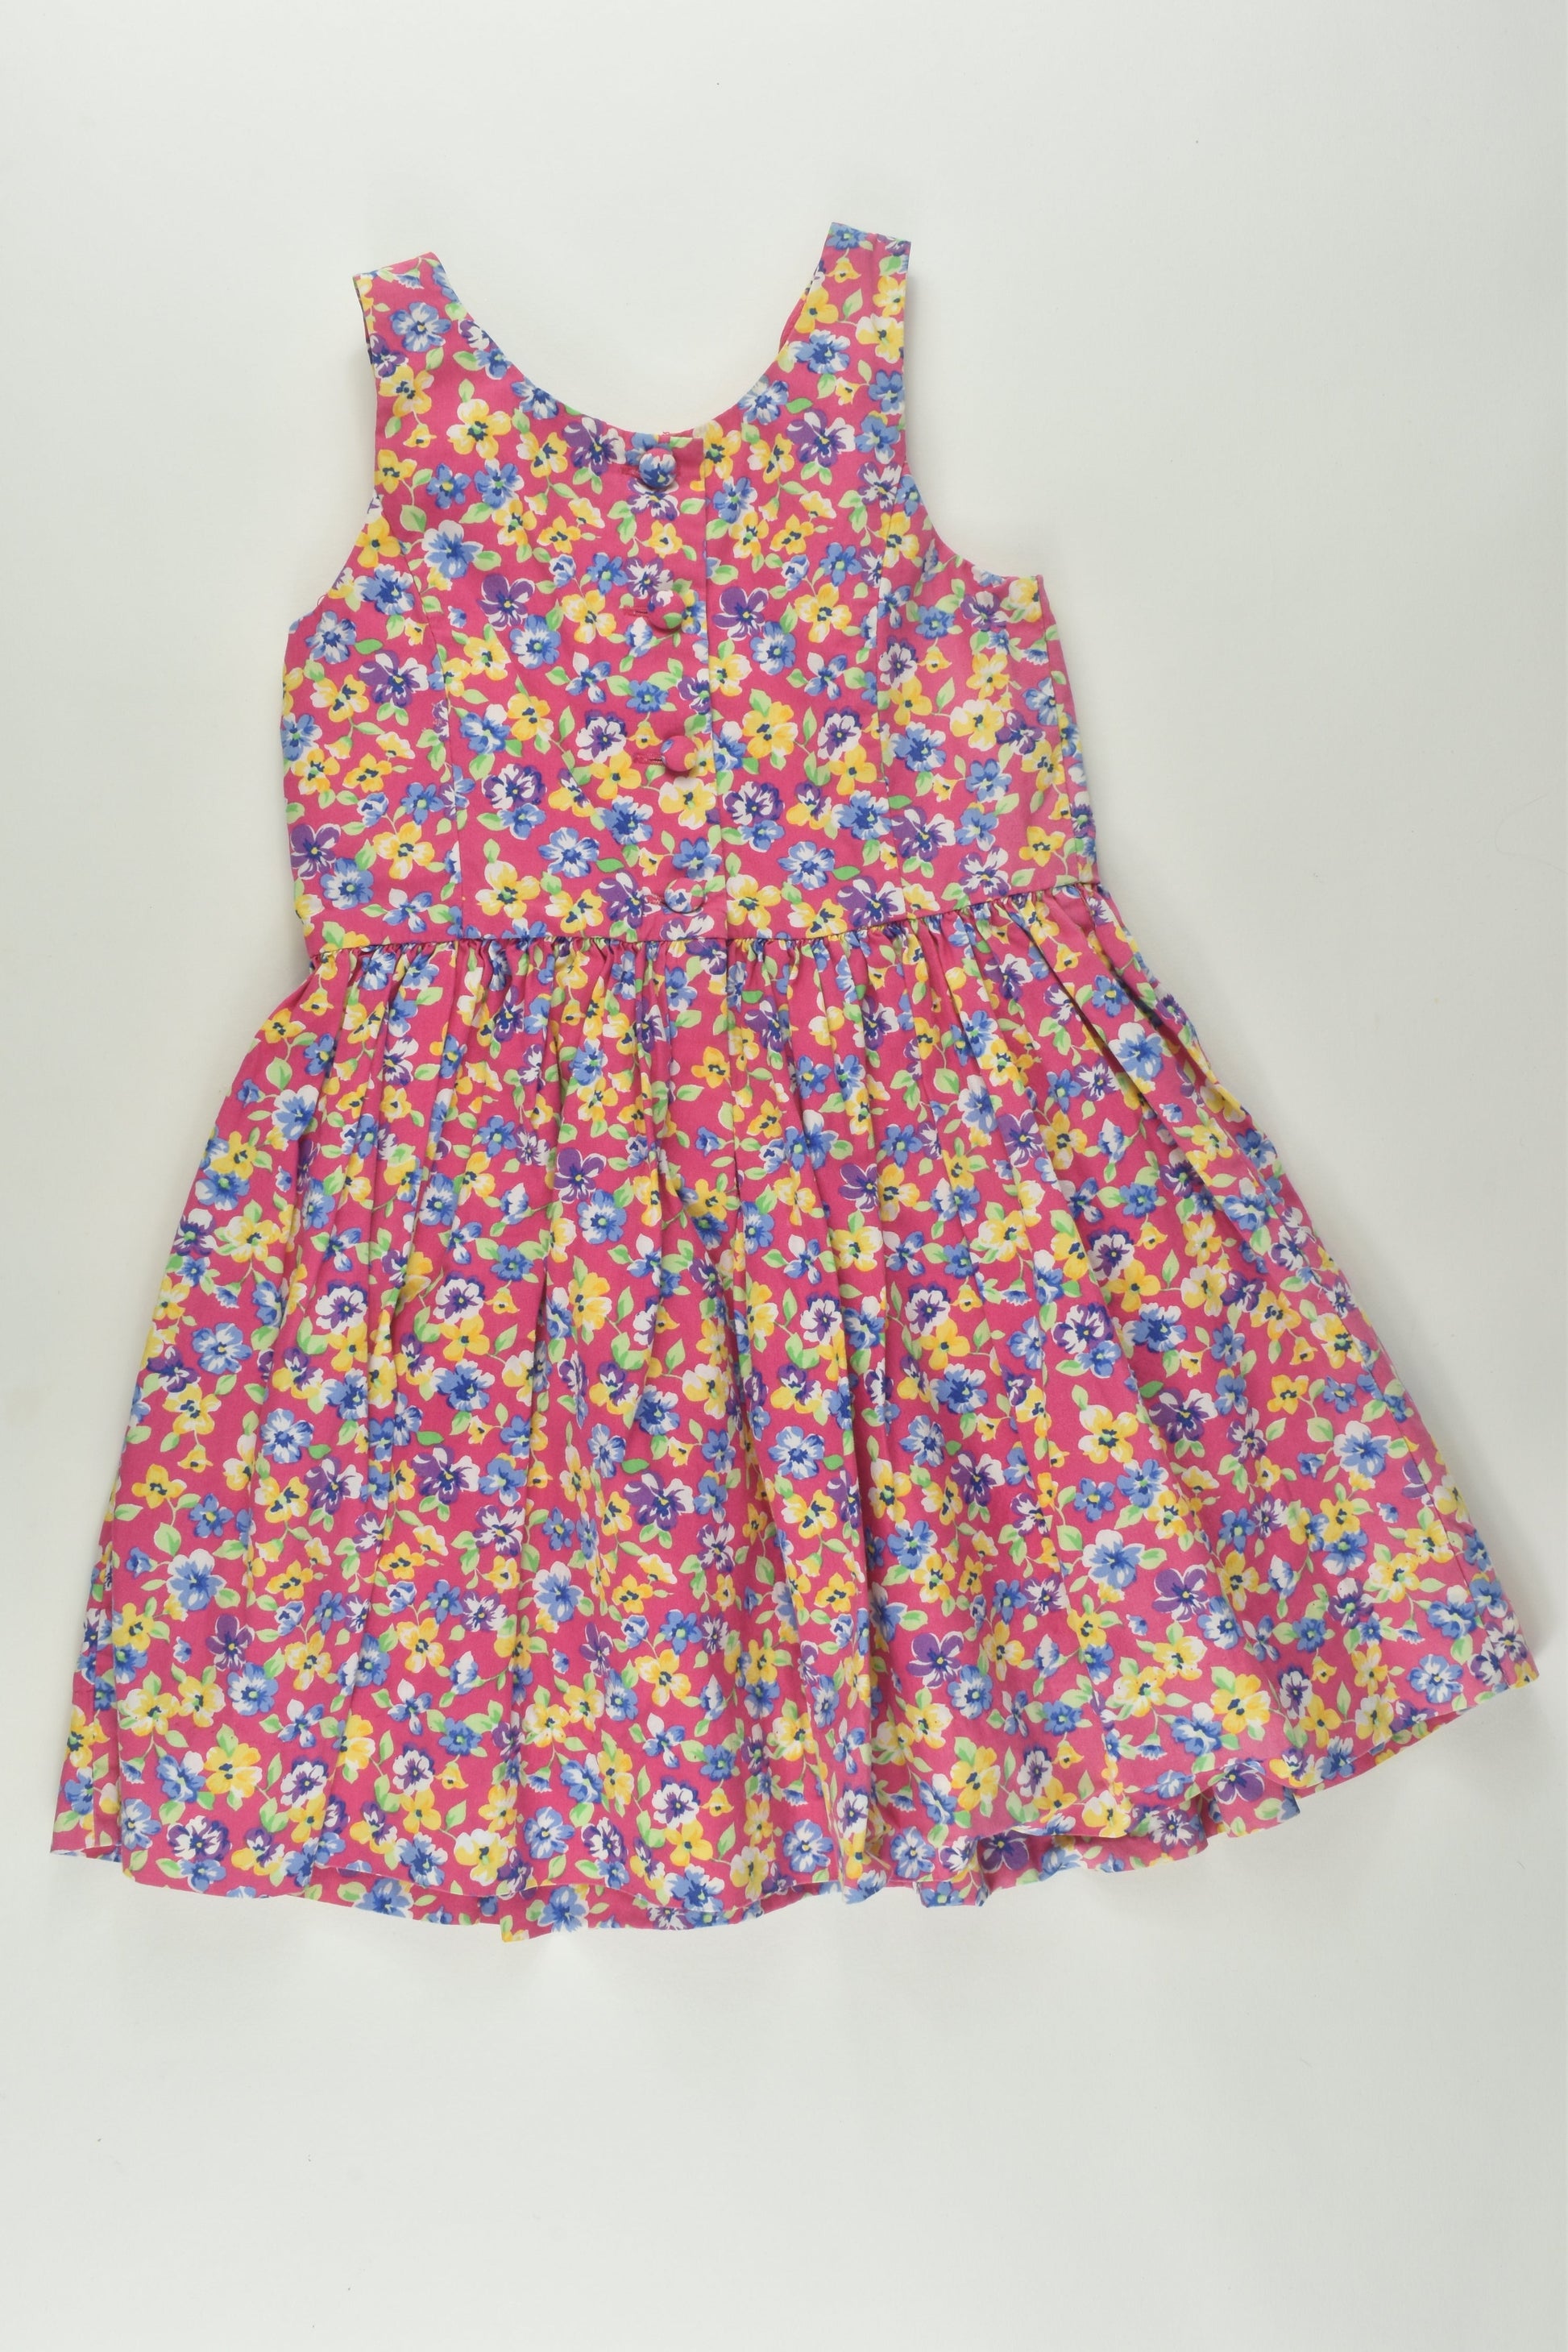 Polo Ralph Lauren Size 3 Lined Floral Dress